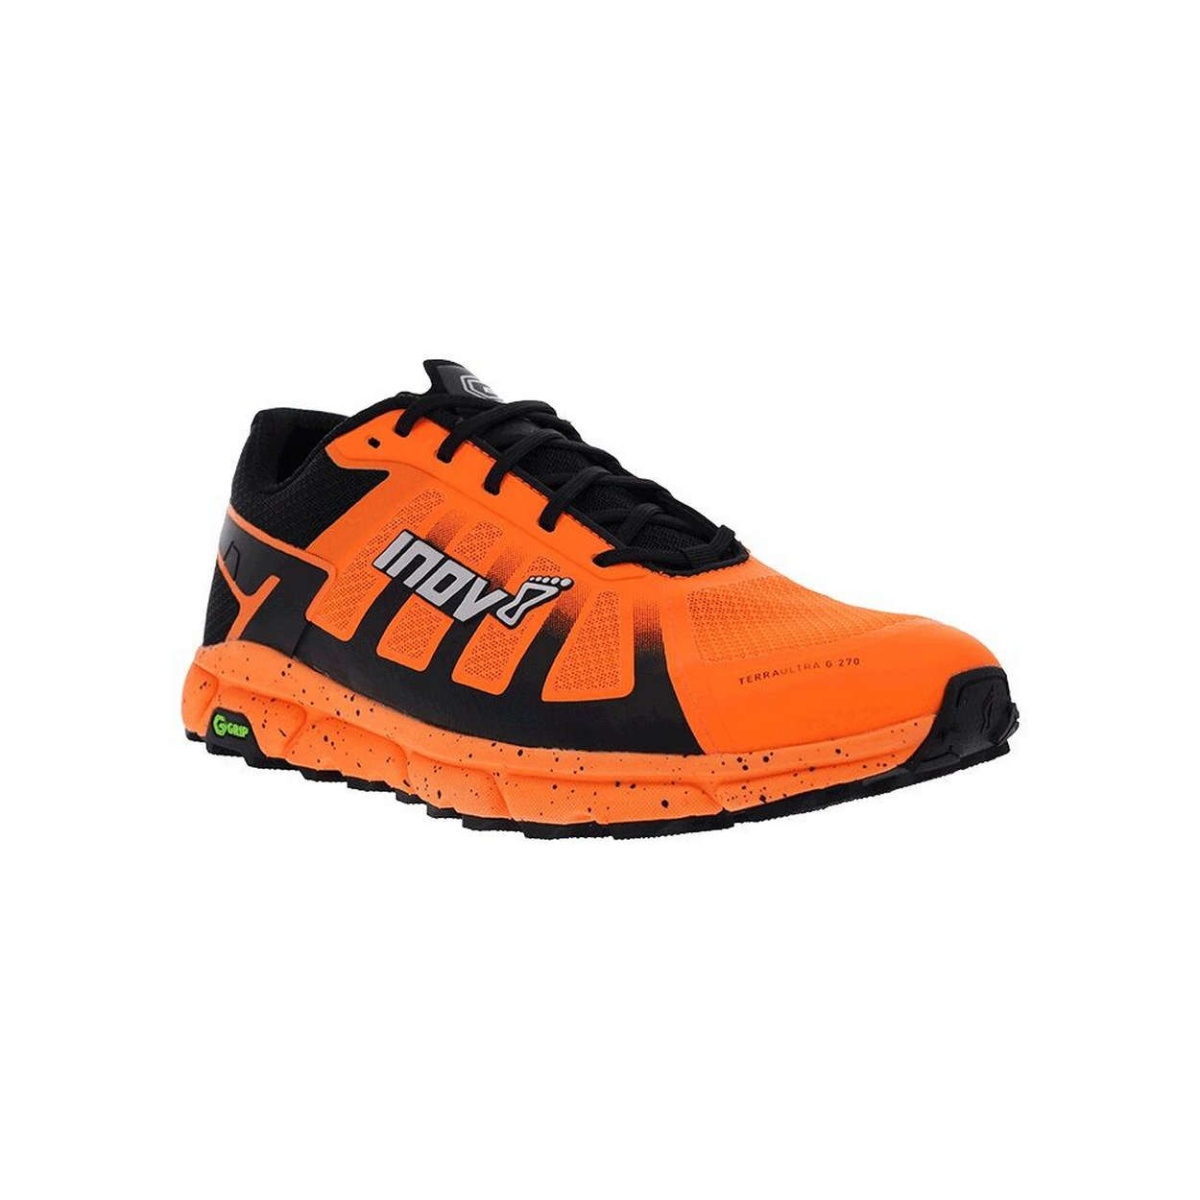 inov 8 Terra Ultra G 270 Orange zero drop trail running shoe Fast and Light CH 007